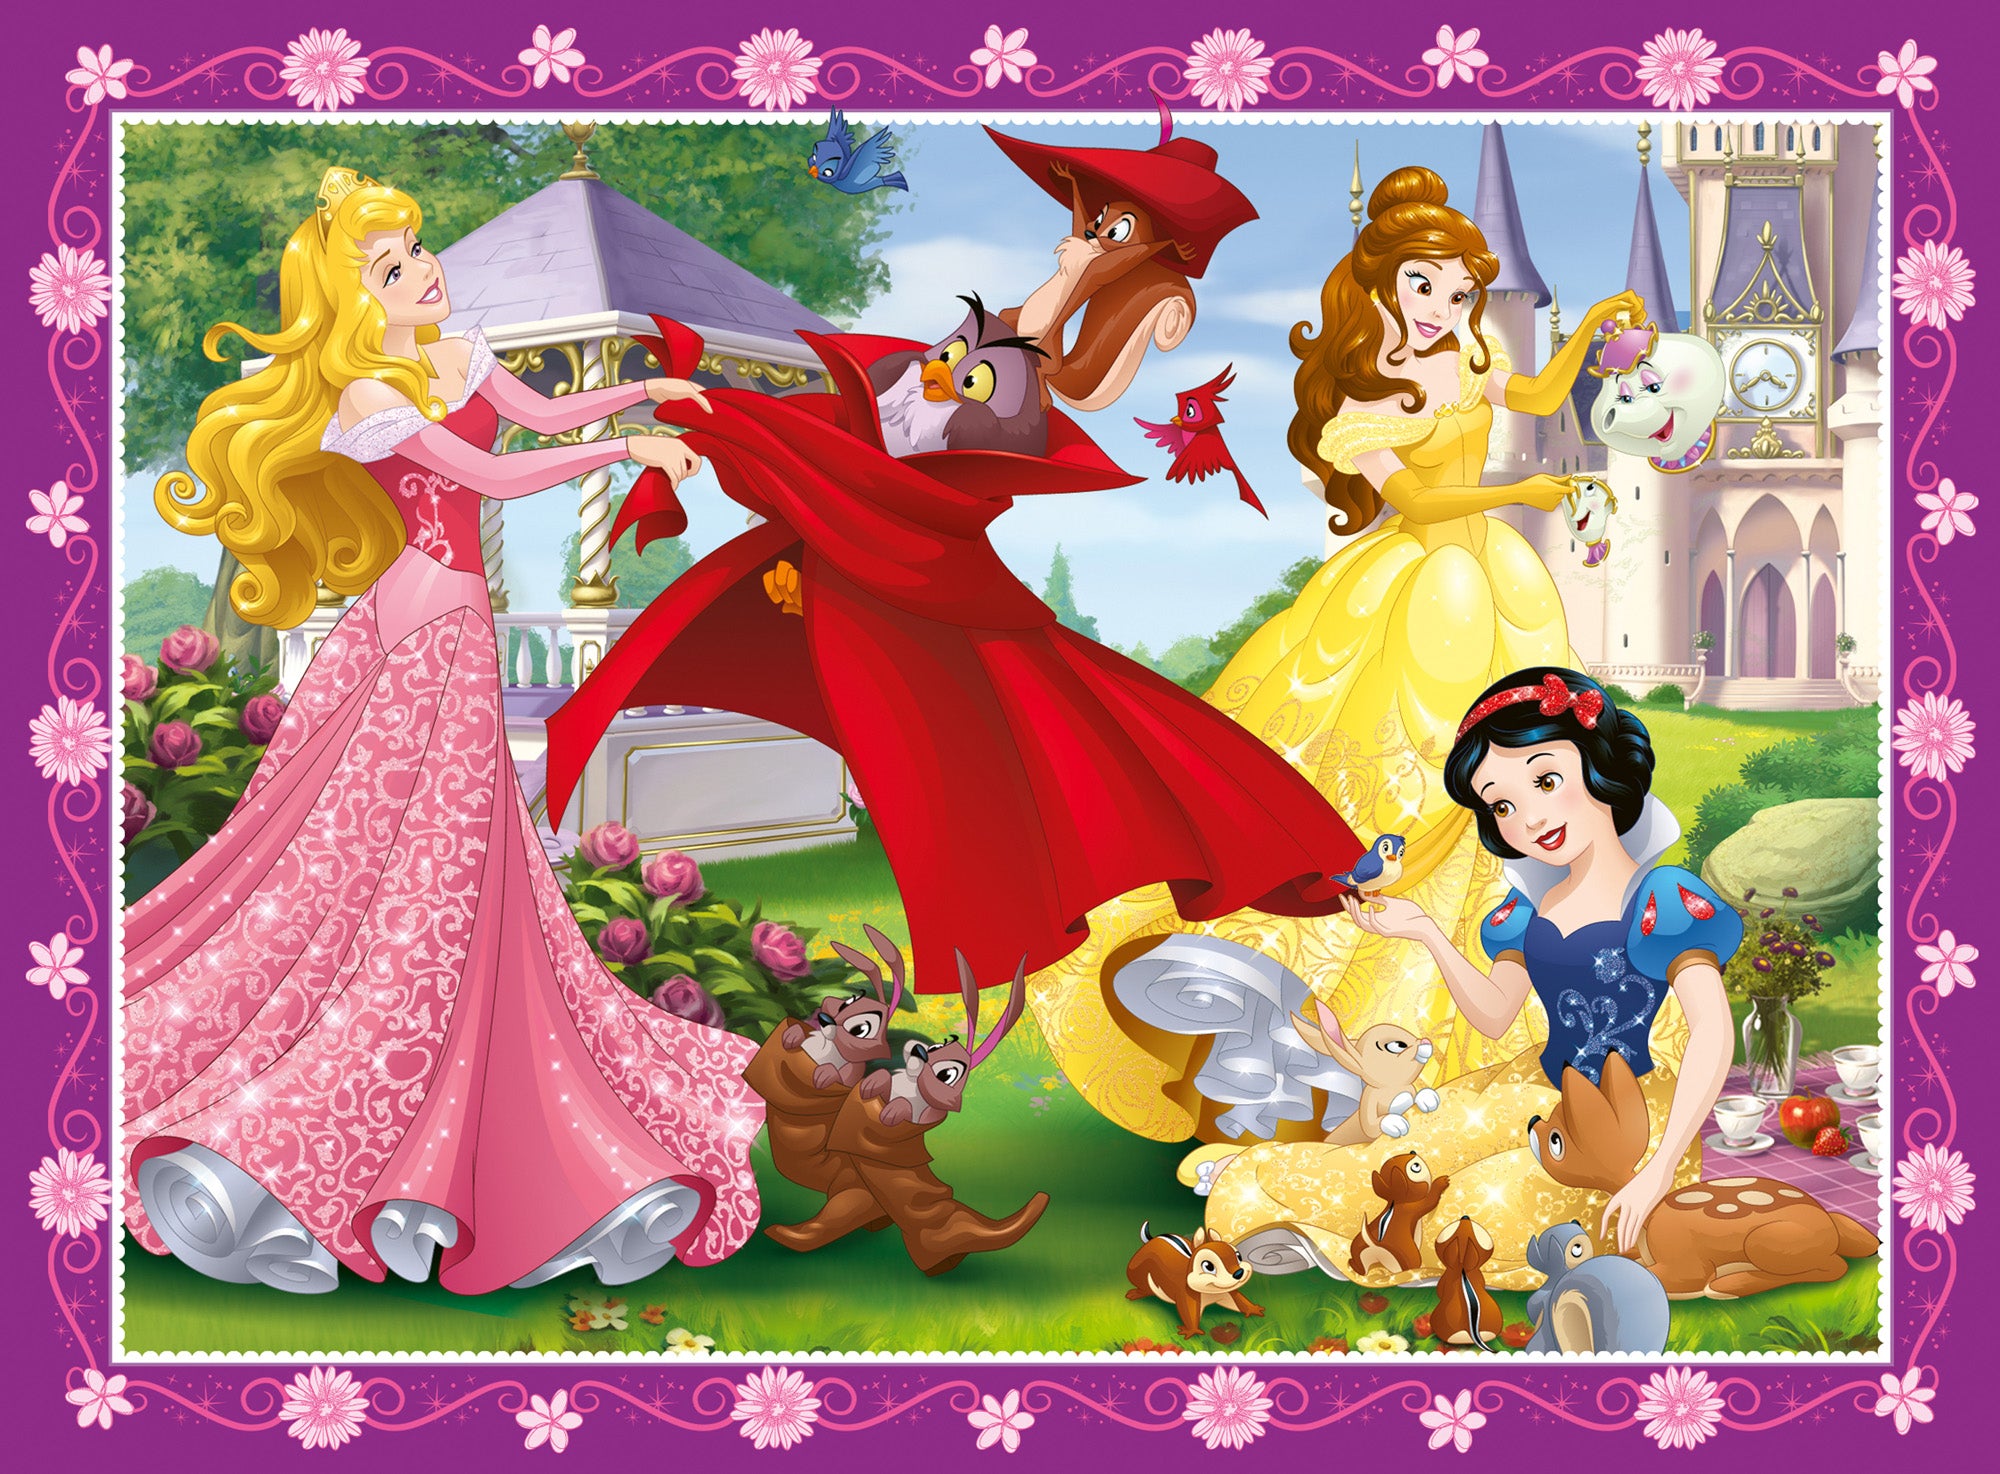 DPR: Disney Princes       12/16/20/24p